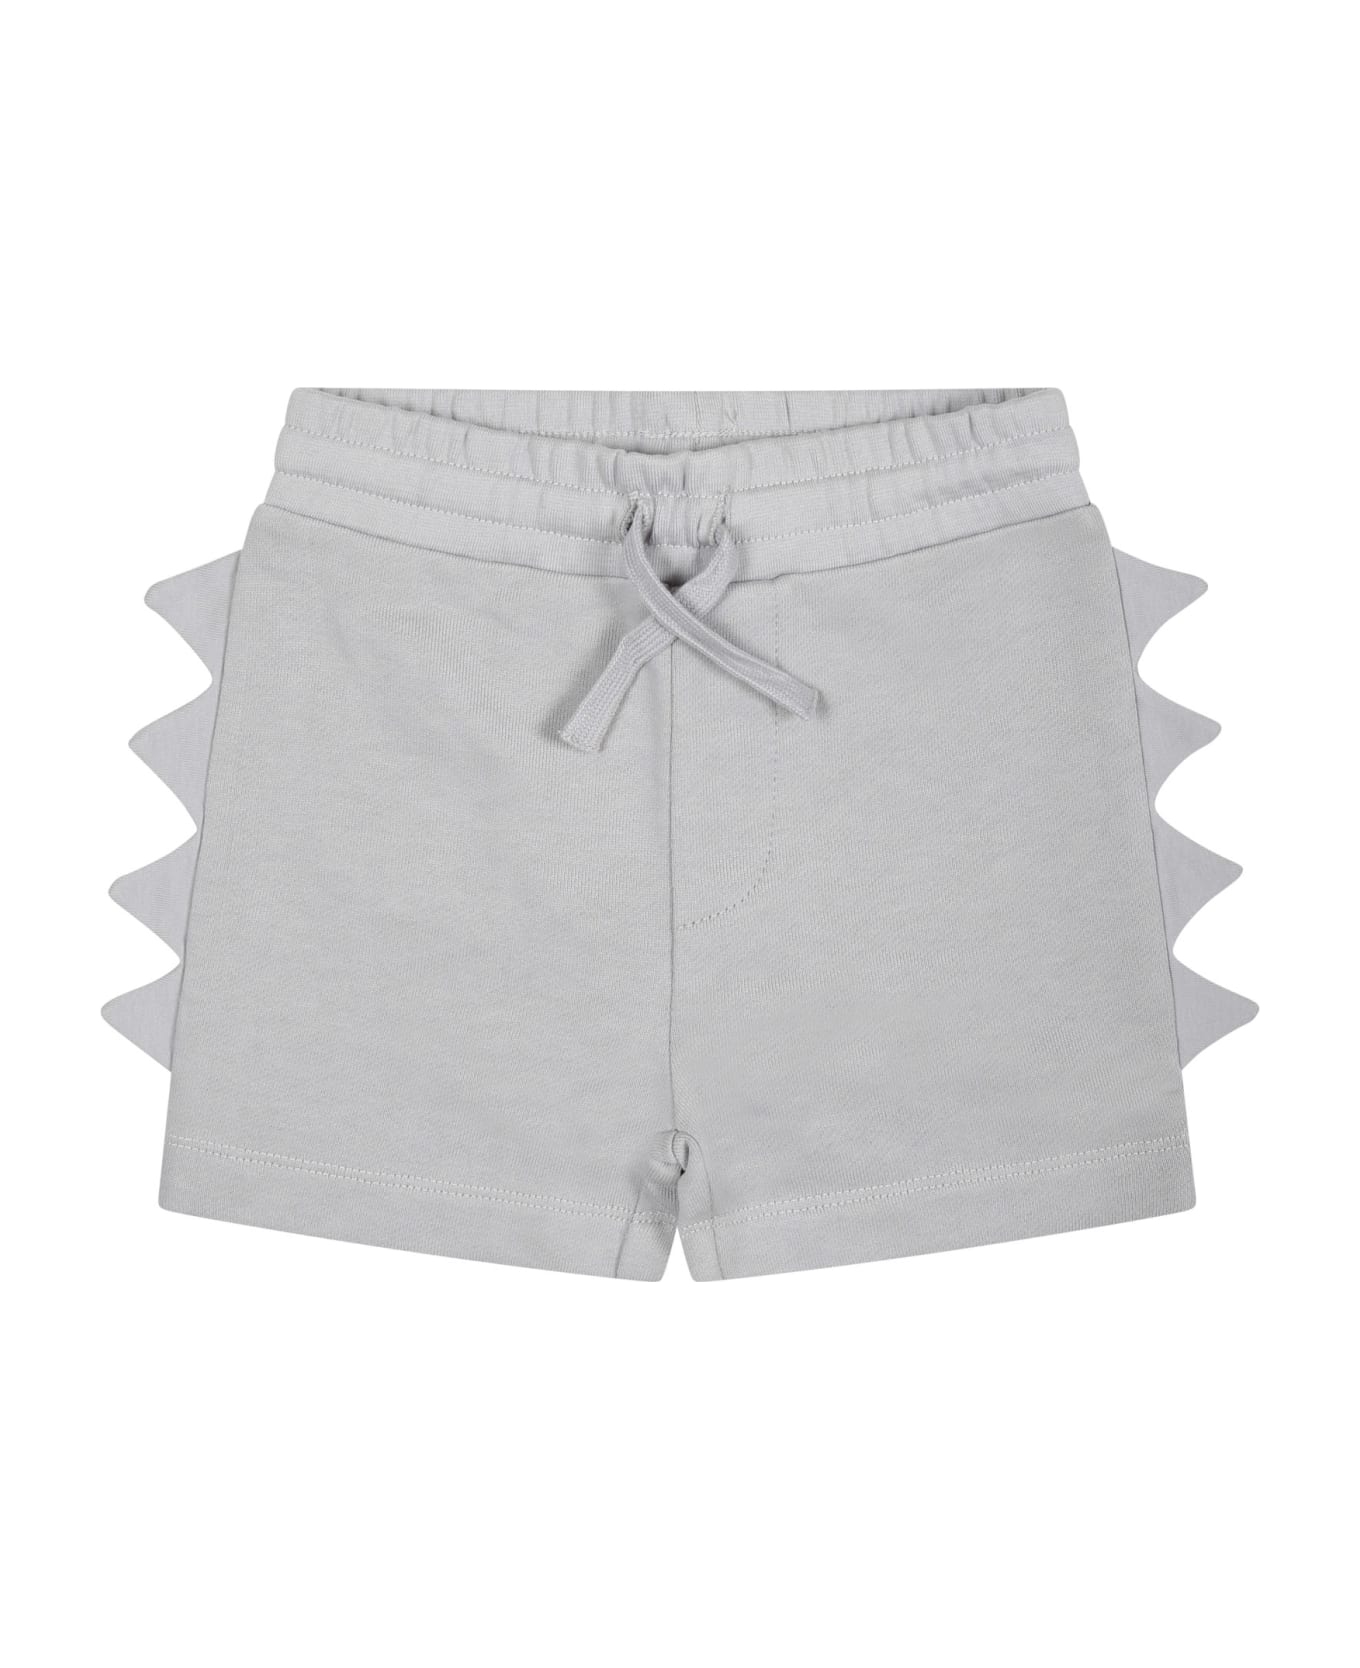 Stella McCartney Kids Gray Shorts For Babies - Grey ボトムス